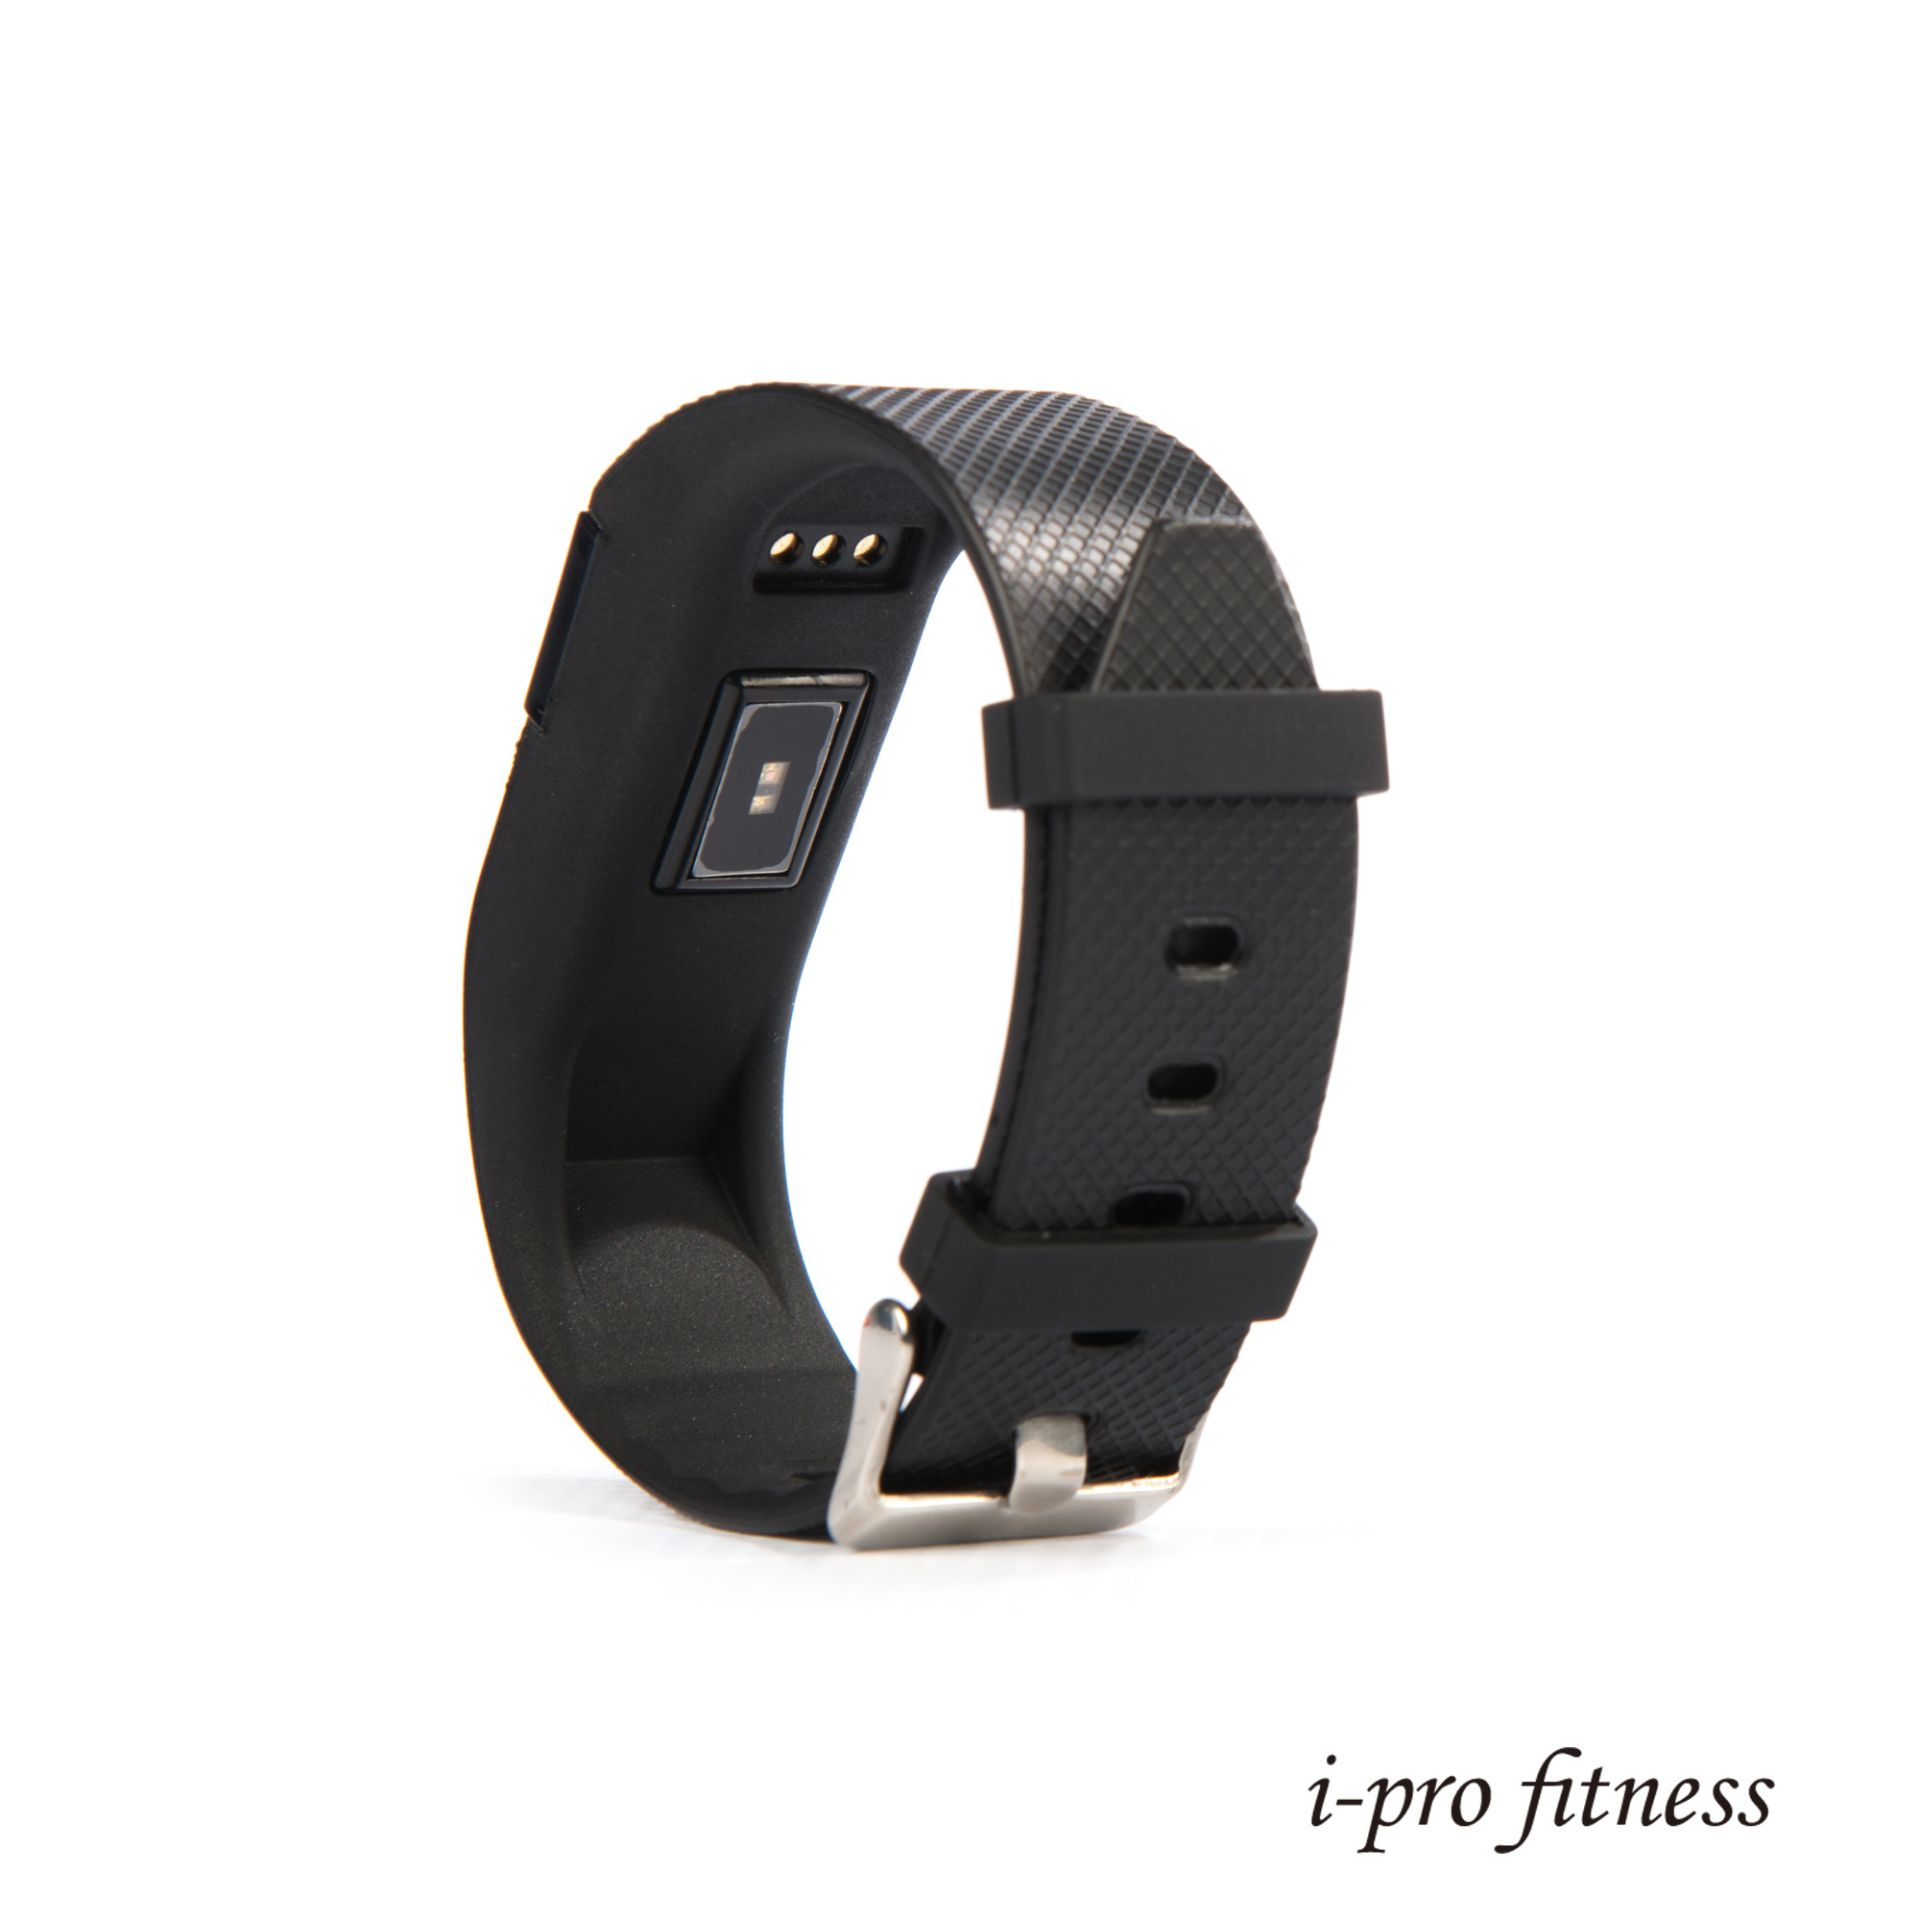 Fitness Tracker i-pro fitness, Bluetooth 4.0 Sports Smart Bracelet, Heart Rate Monitor, Pedometer. - Bild 8 aus 8